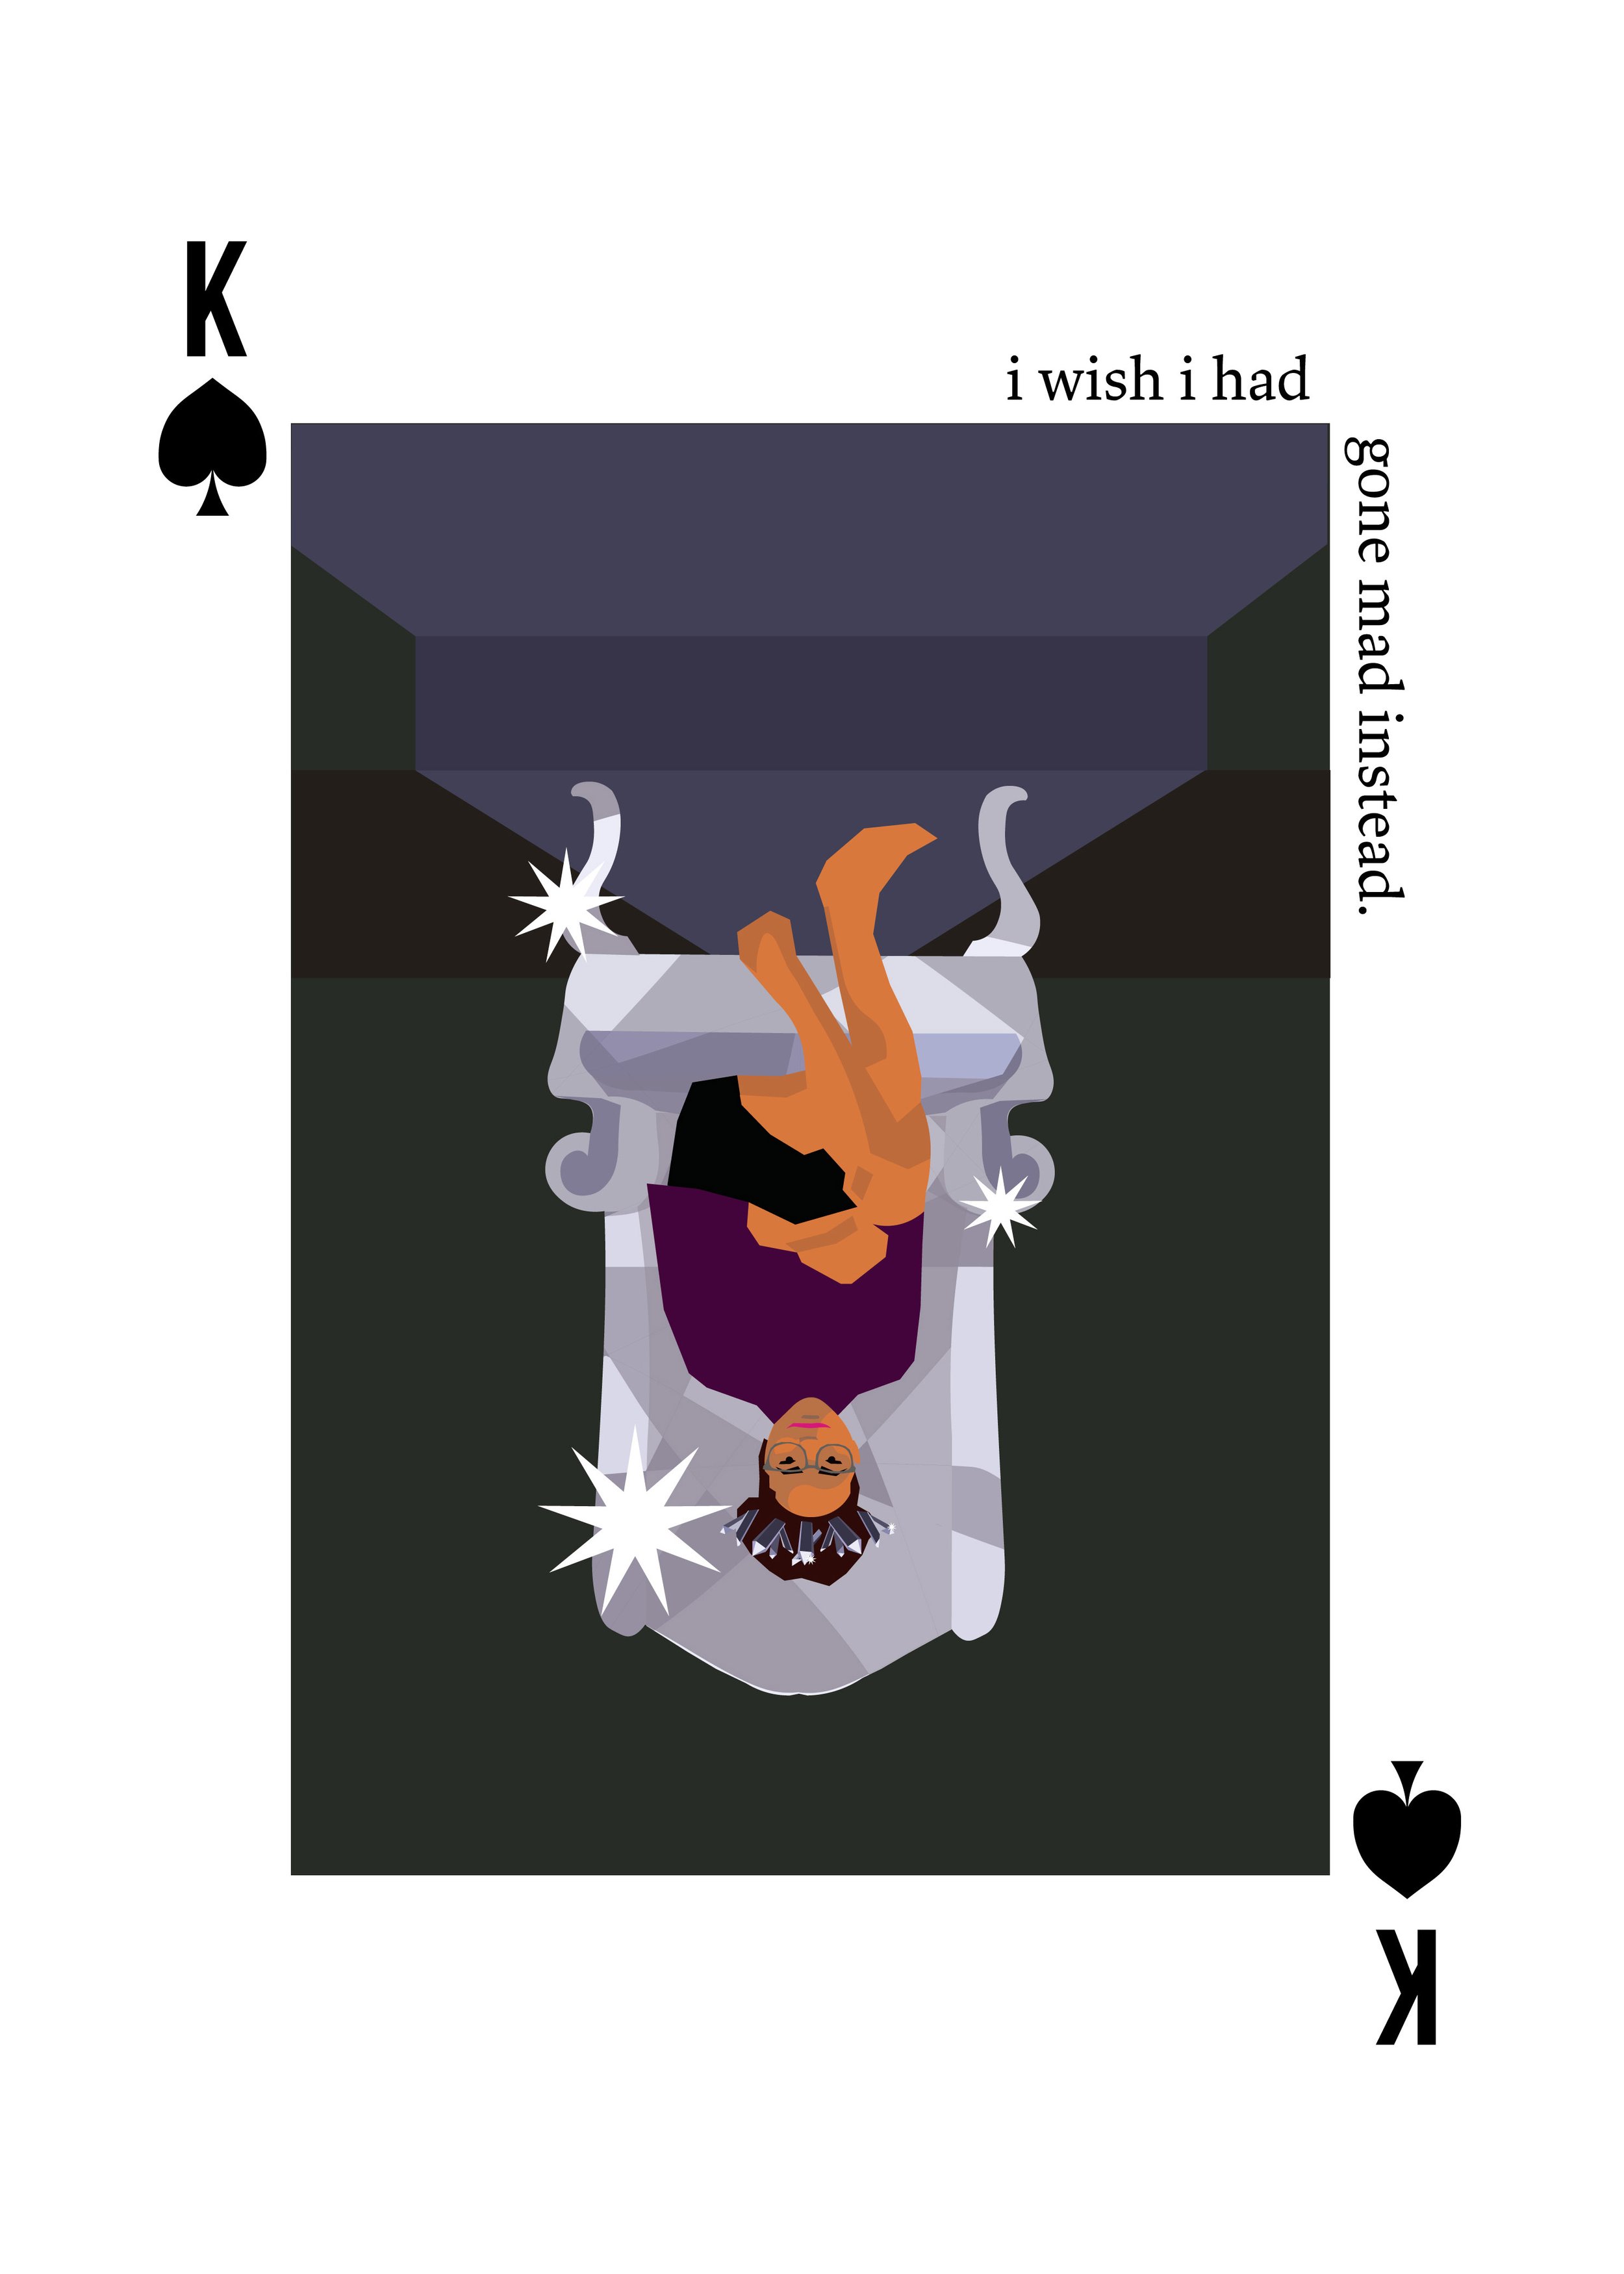 k-of-spades.jpg